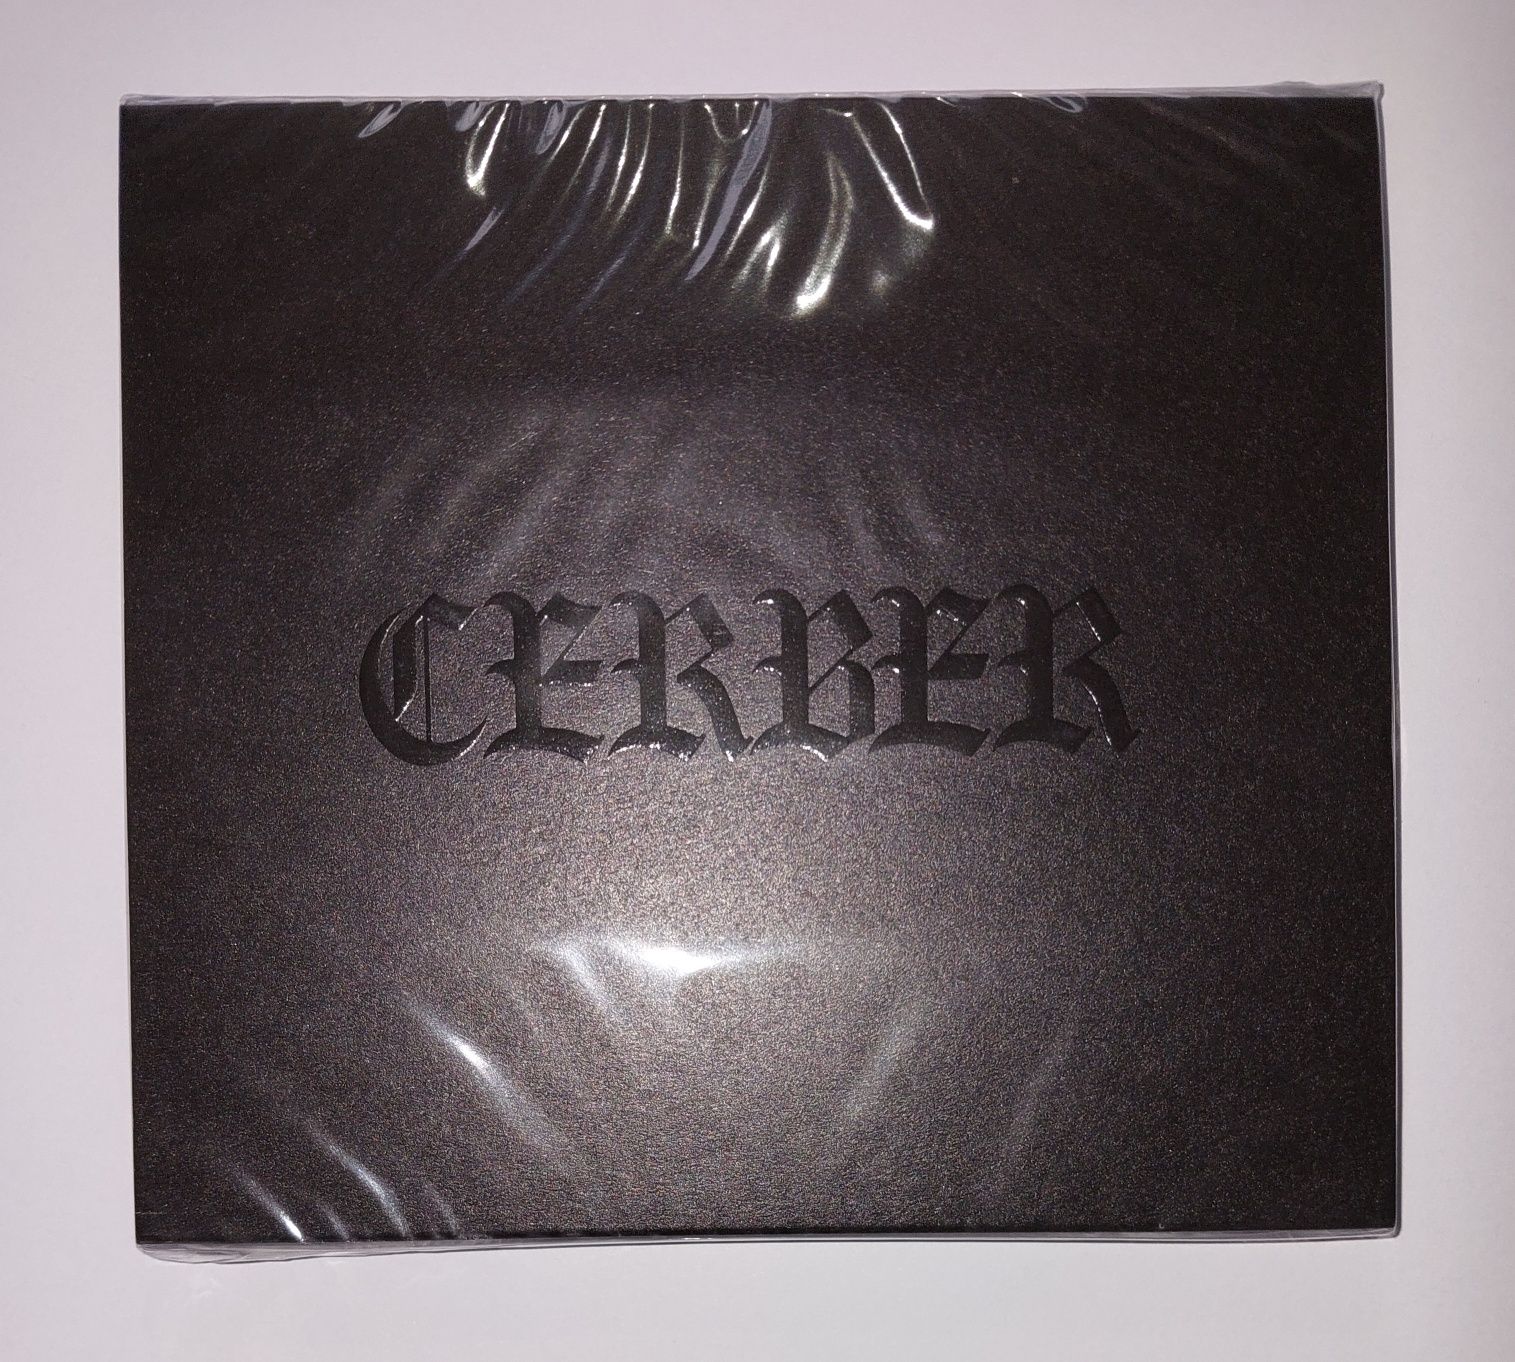 Szpaku "Cerber" EP + brelok Cerber